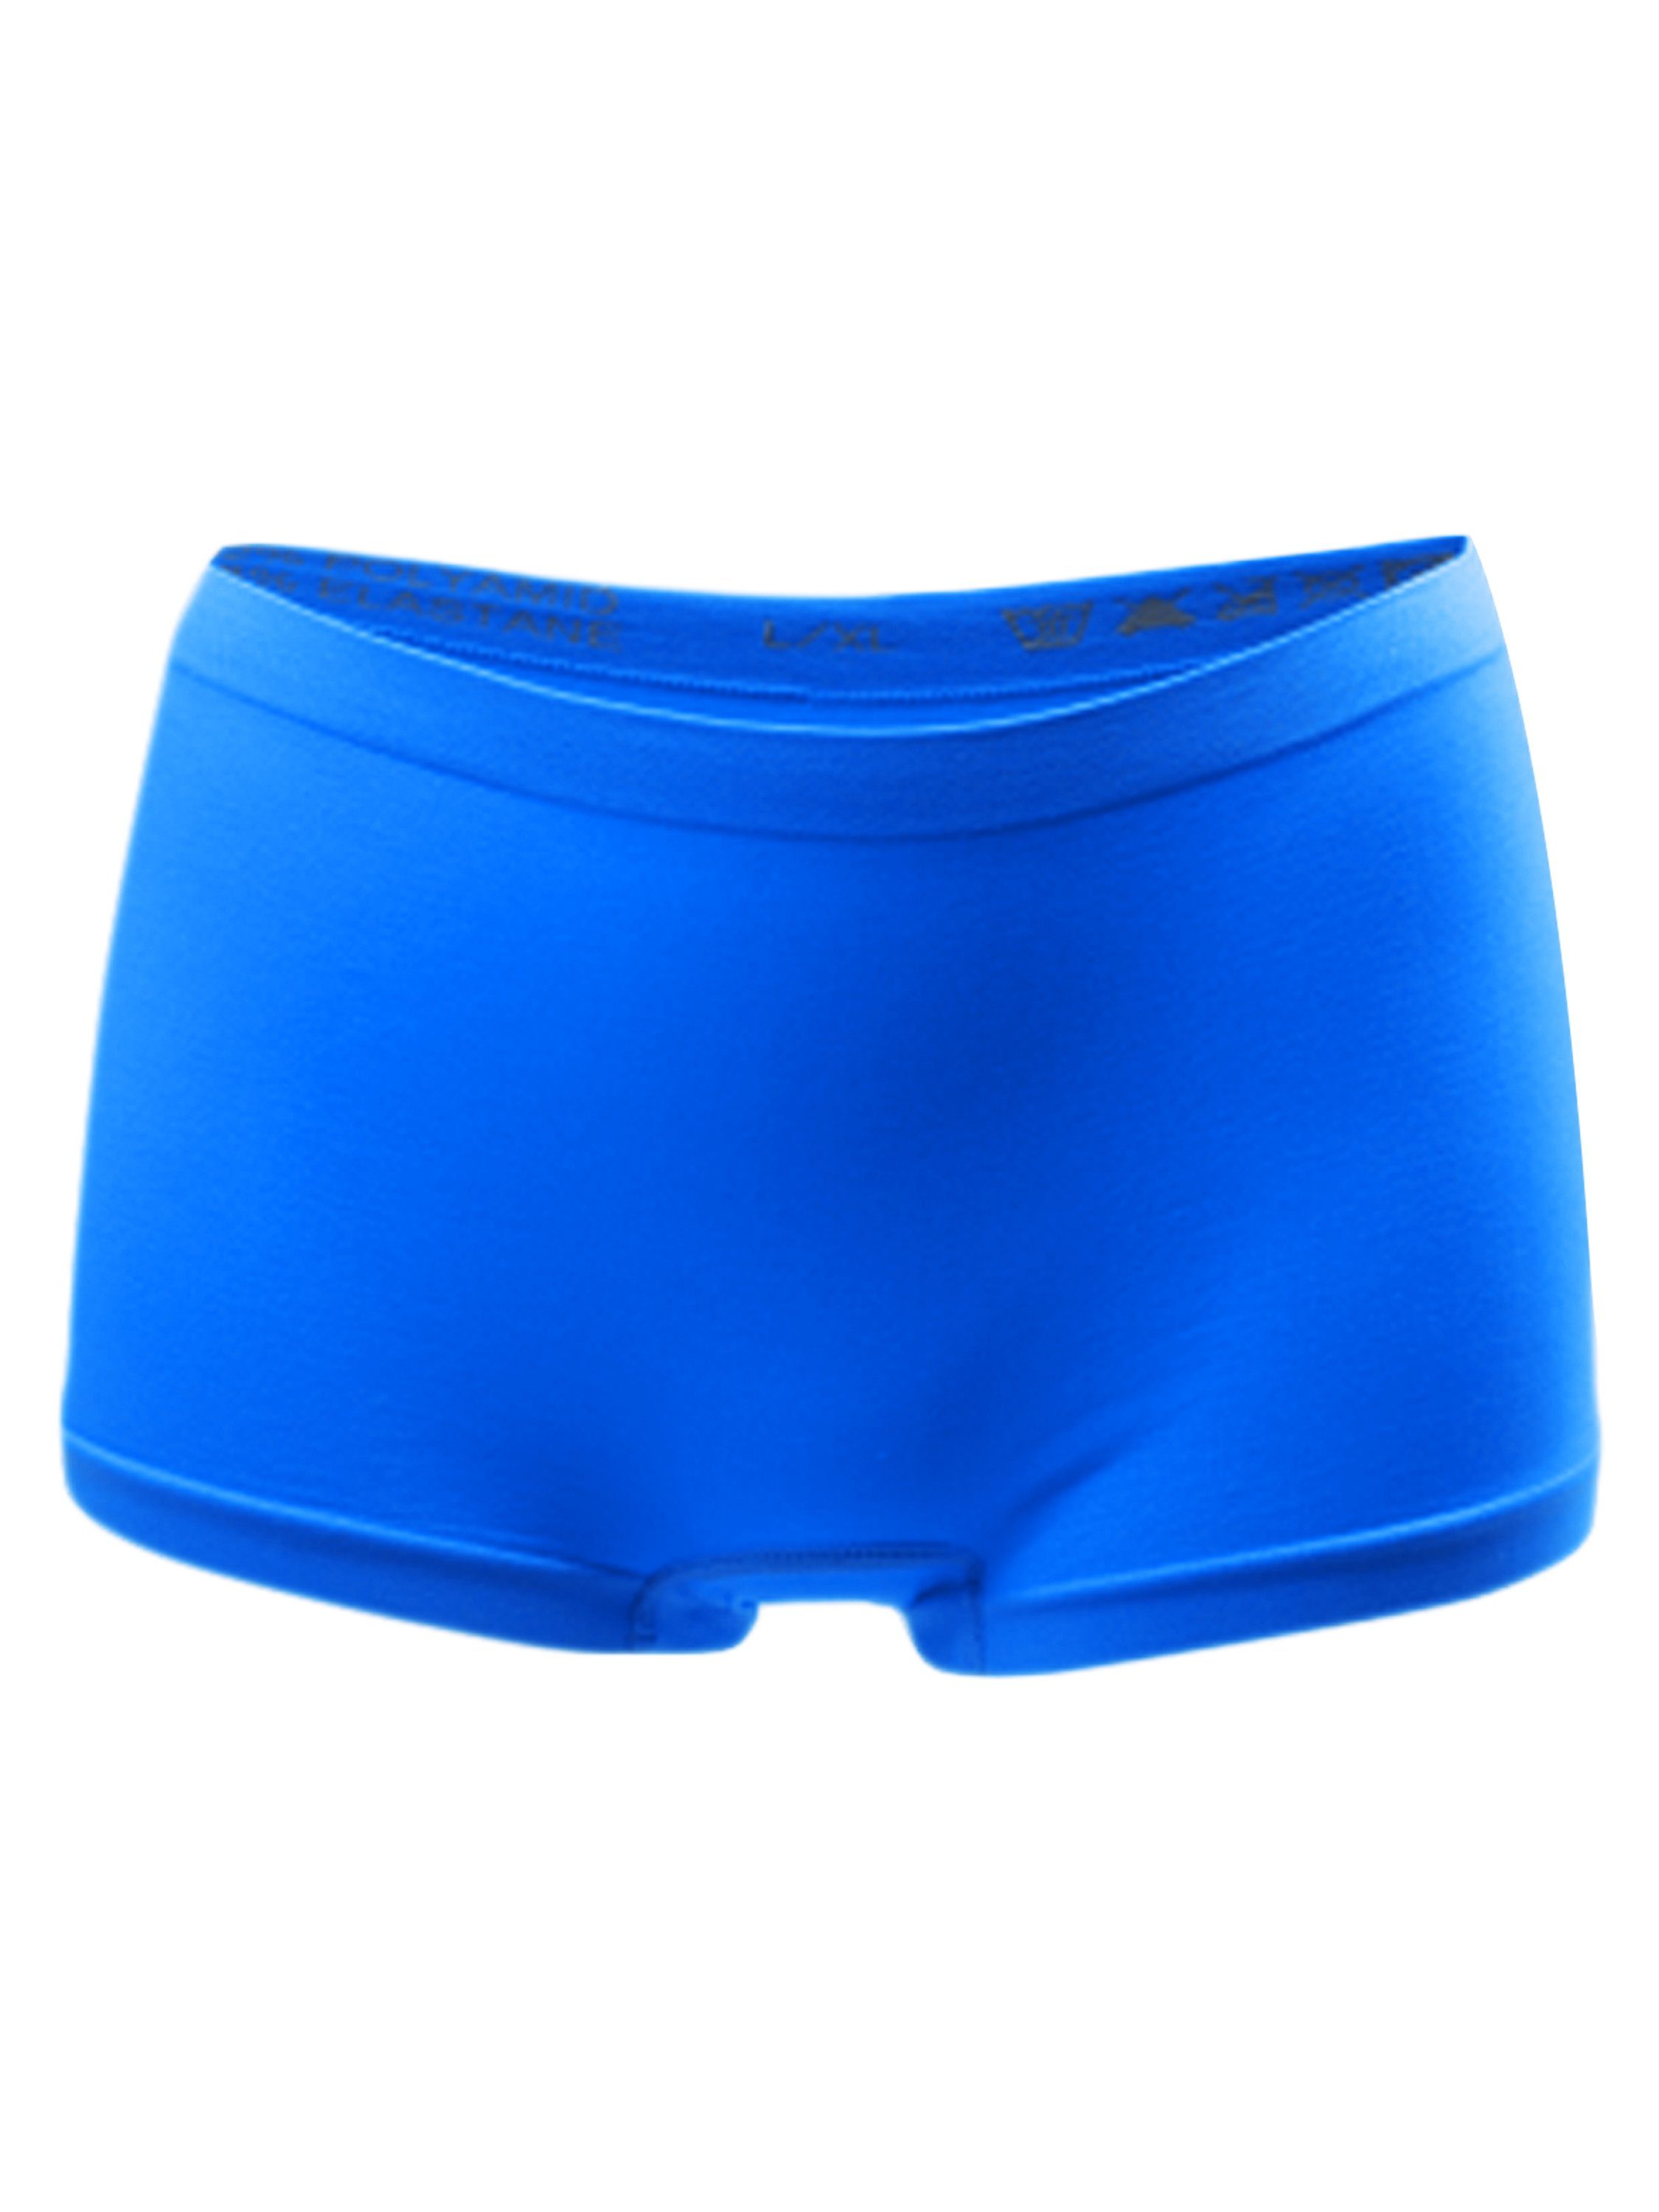 TEXEMP Panty 8er Pack 8er-Pack) Panty S/M Panties Unterwäsche Hotpants Slip Slips Microfaser Damen L/XL (Spar-Pack, Schlüpfer